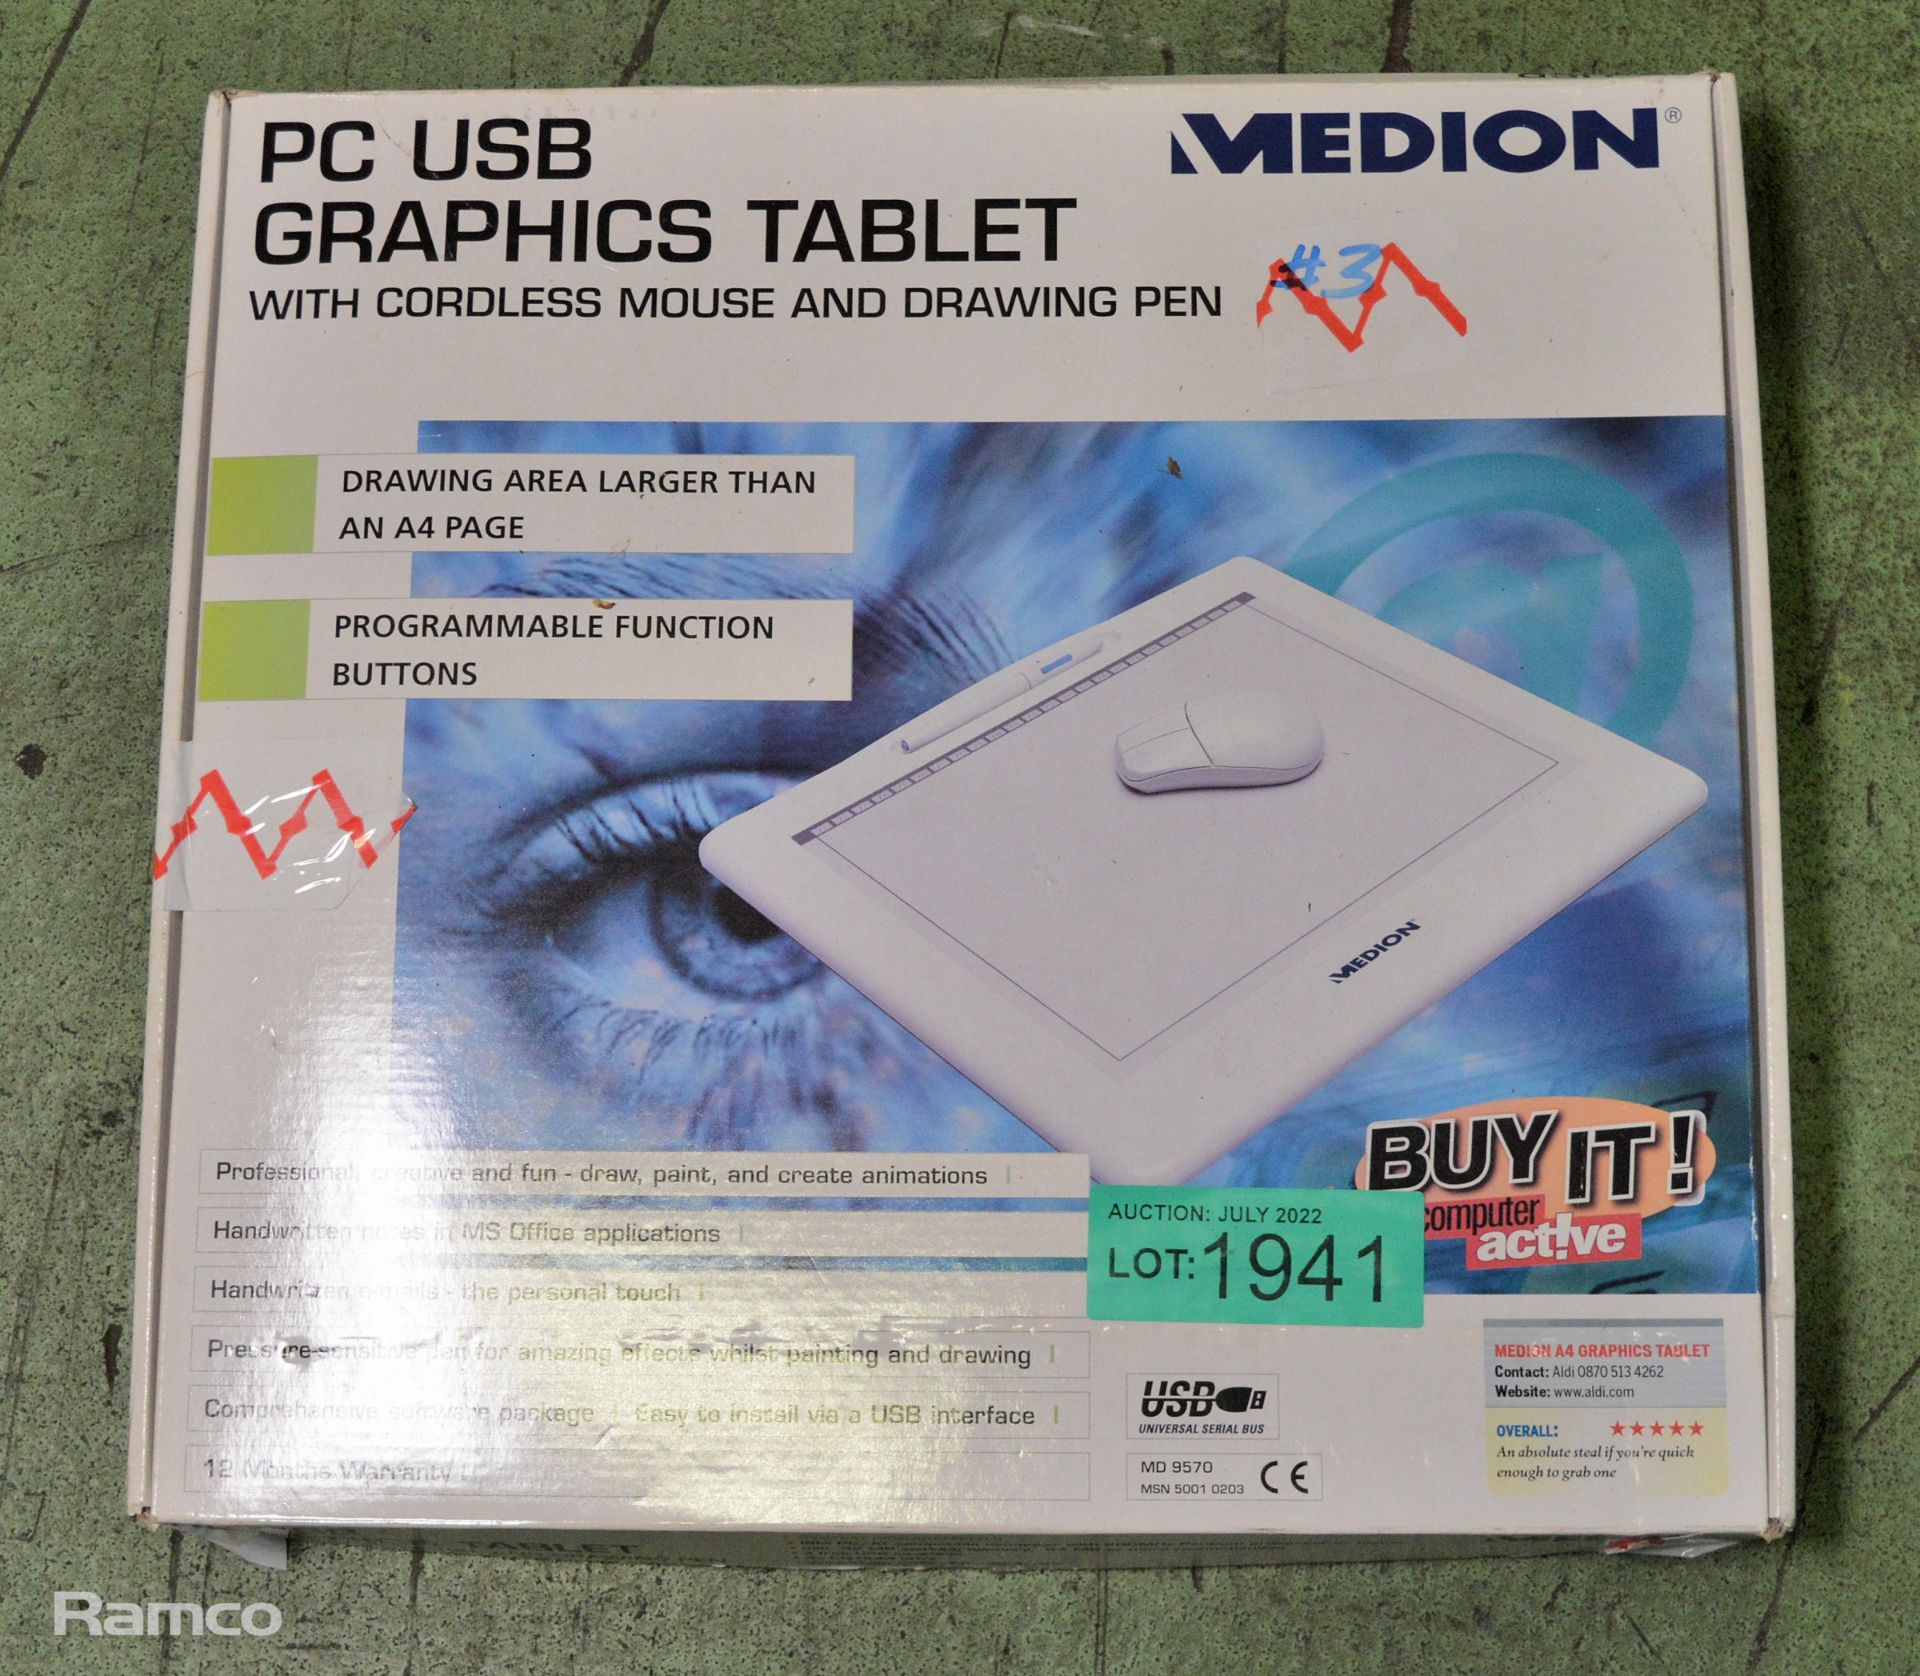 Medion computer USB graphics tablet